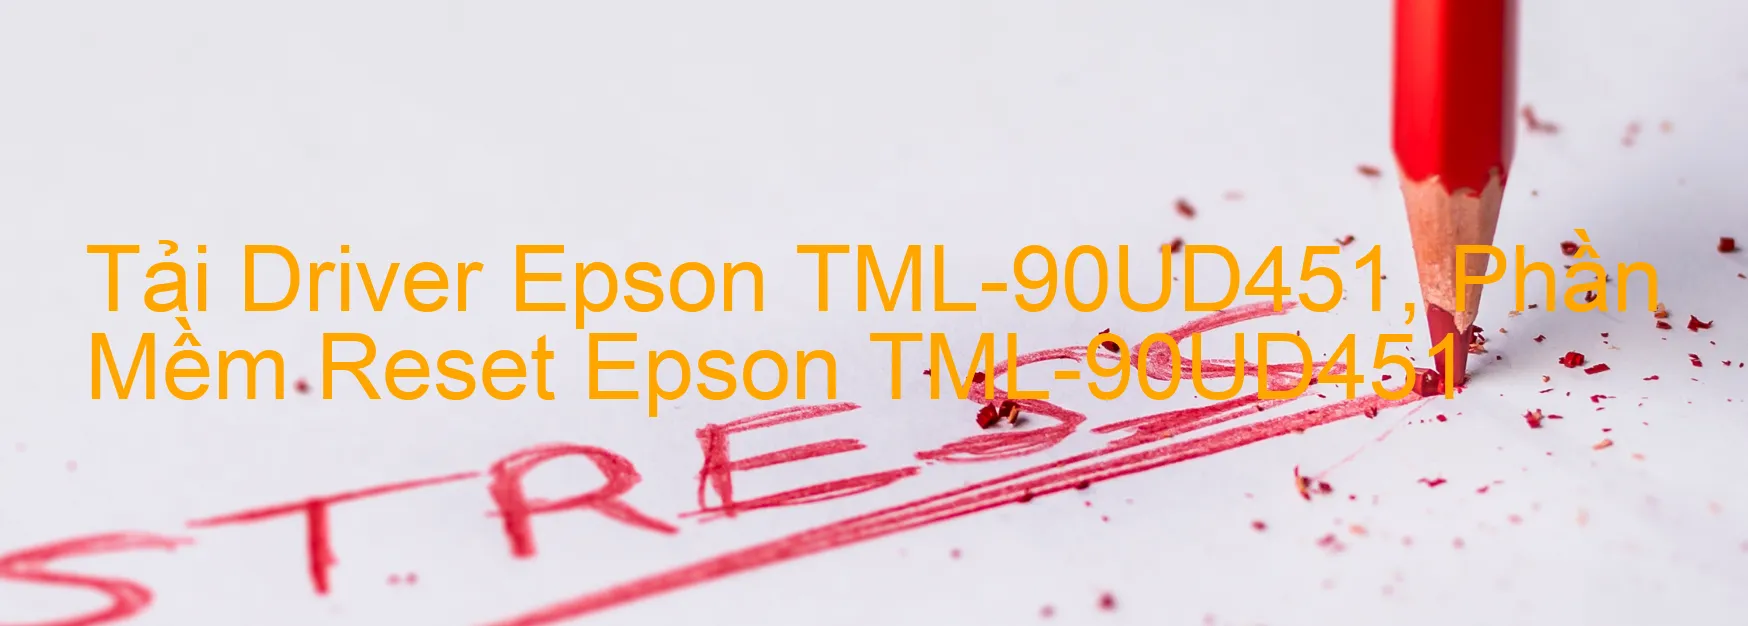 Driver Epson TML-90UD451, Phần Mềm Reset Epson TML-90UD451